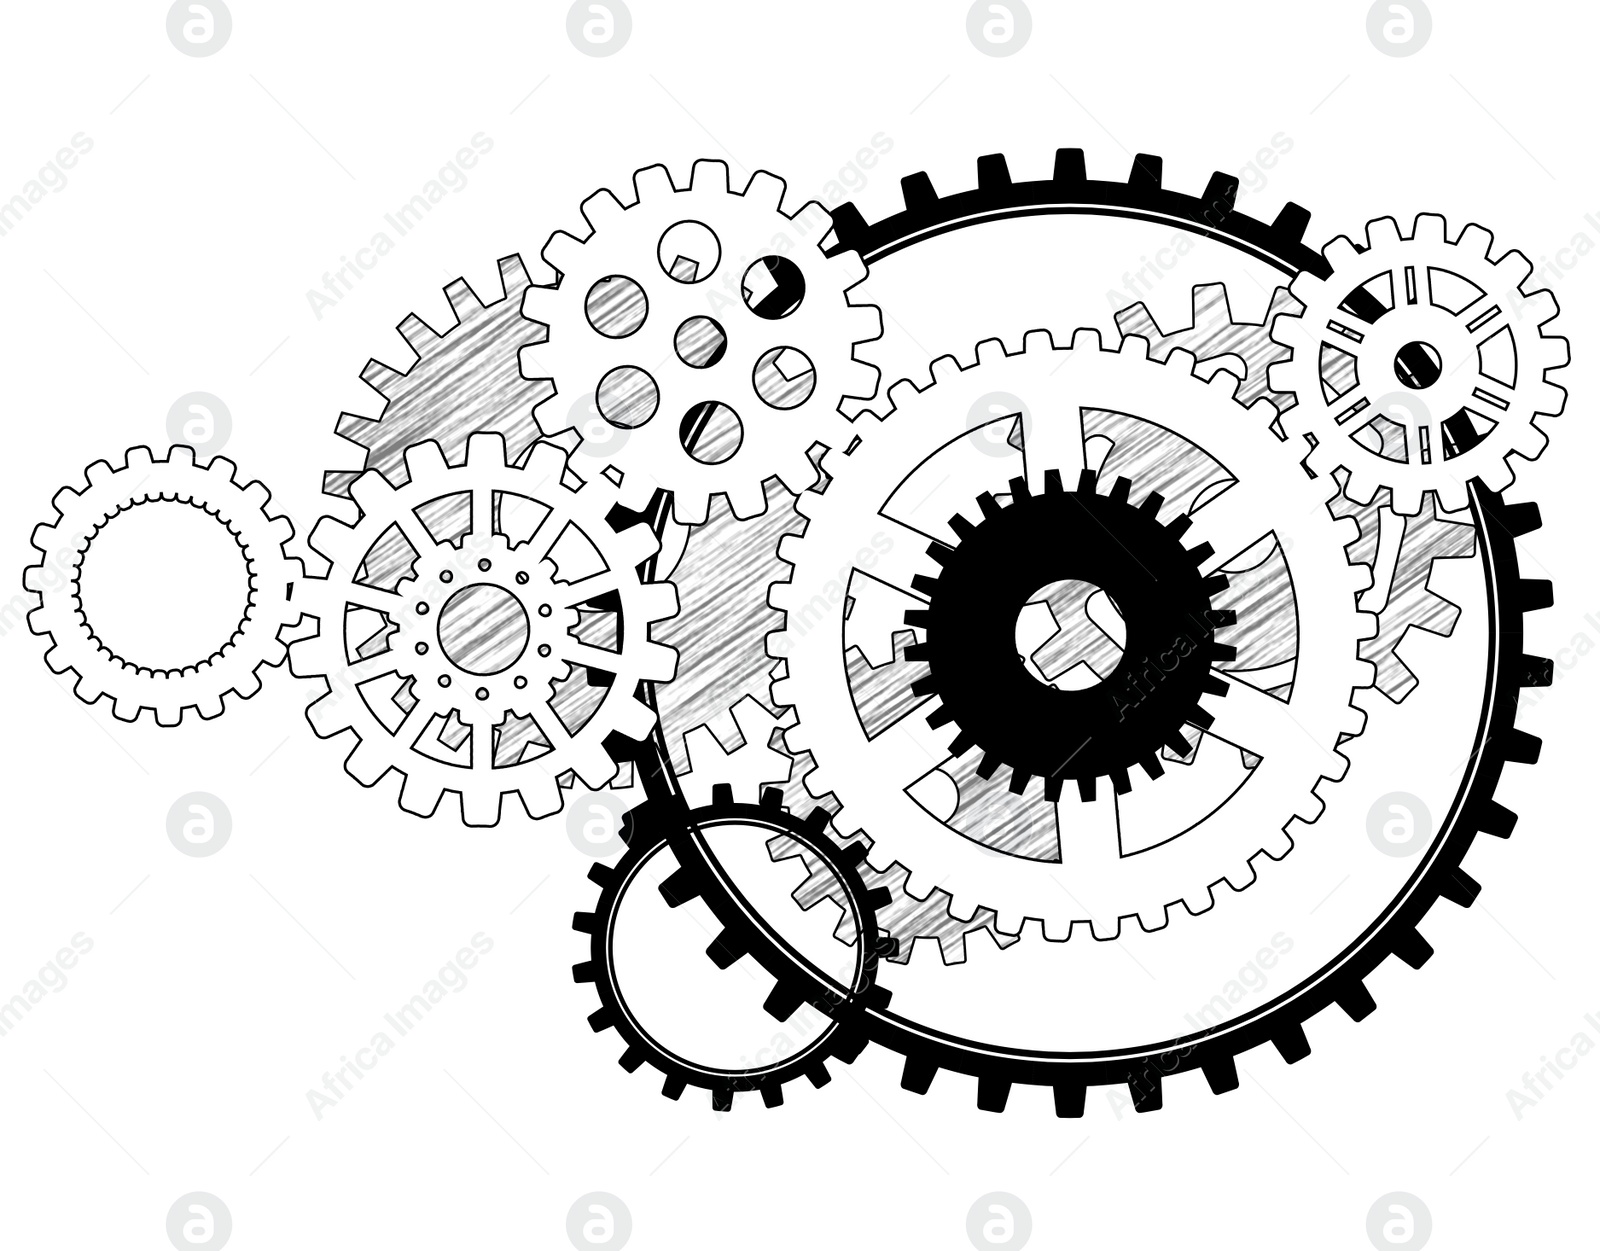 Illustration of  gear mechanism on white background